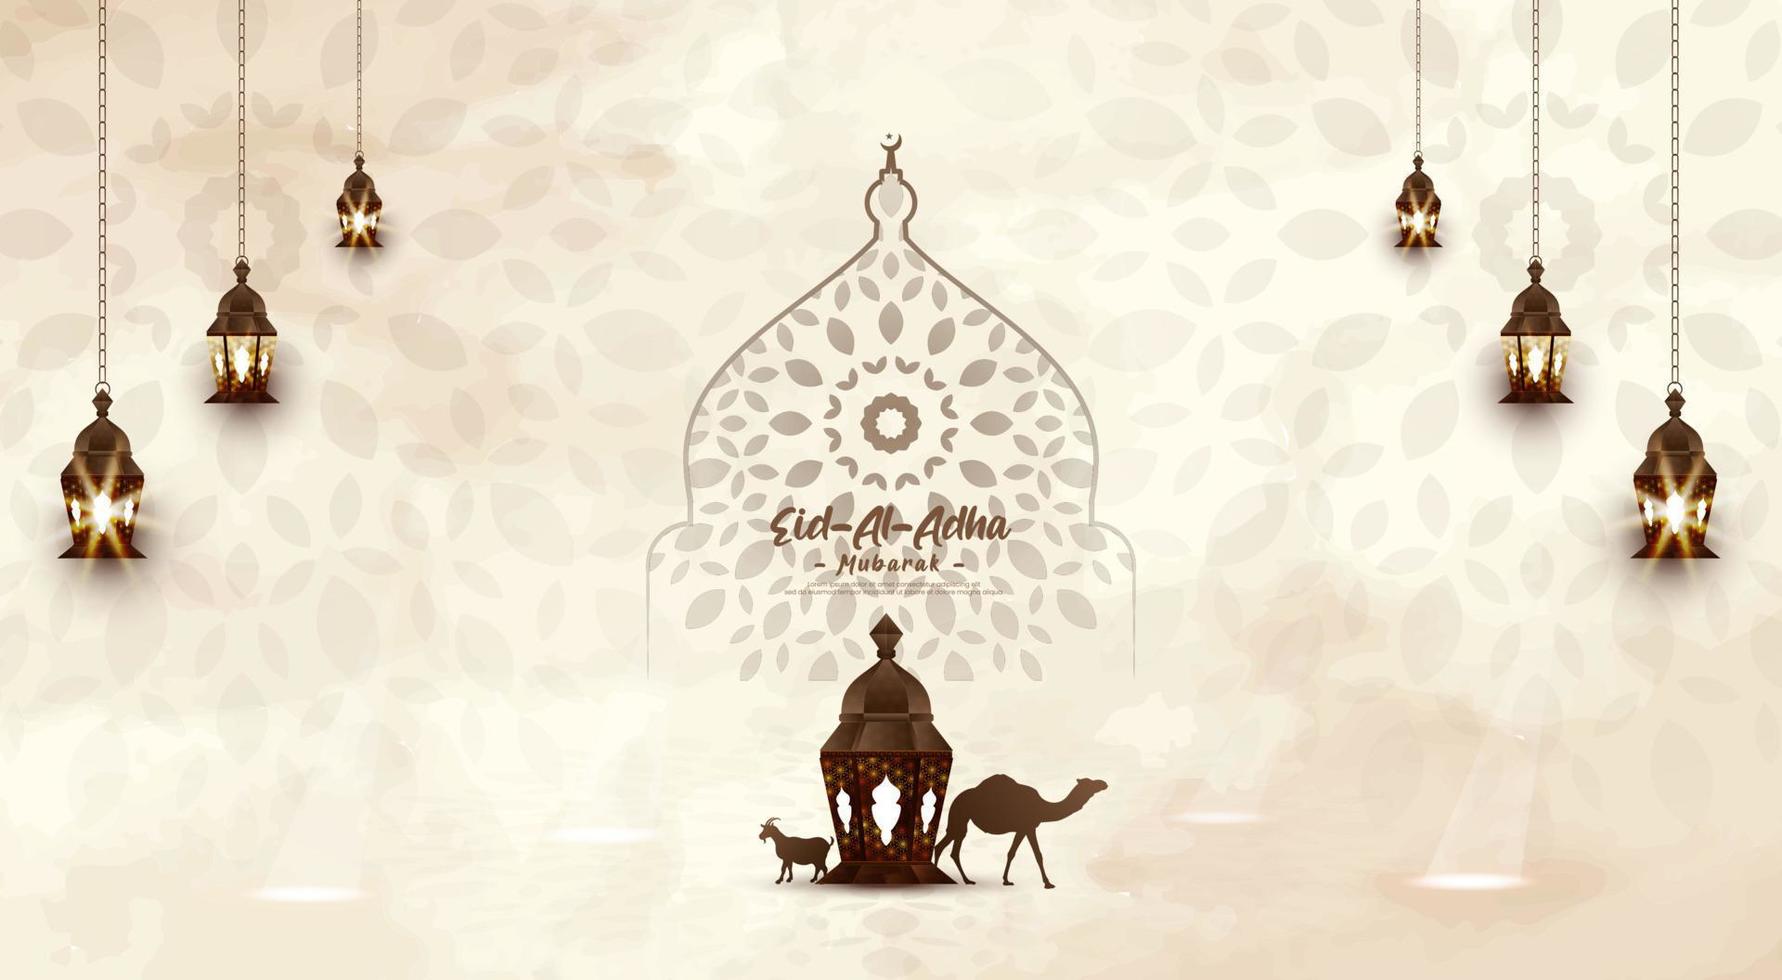 Eid al adha mubarak template design. vector